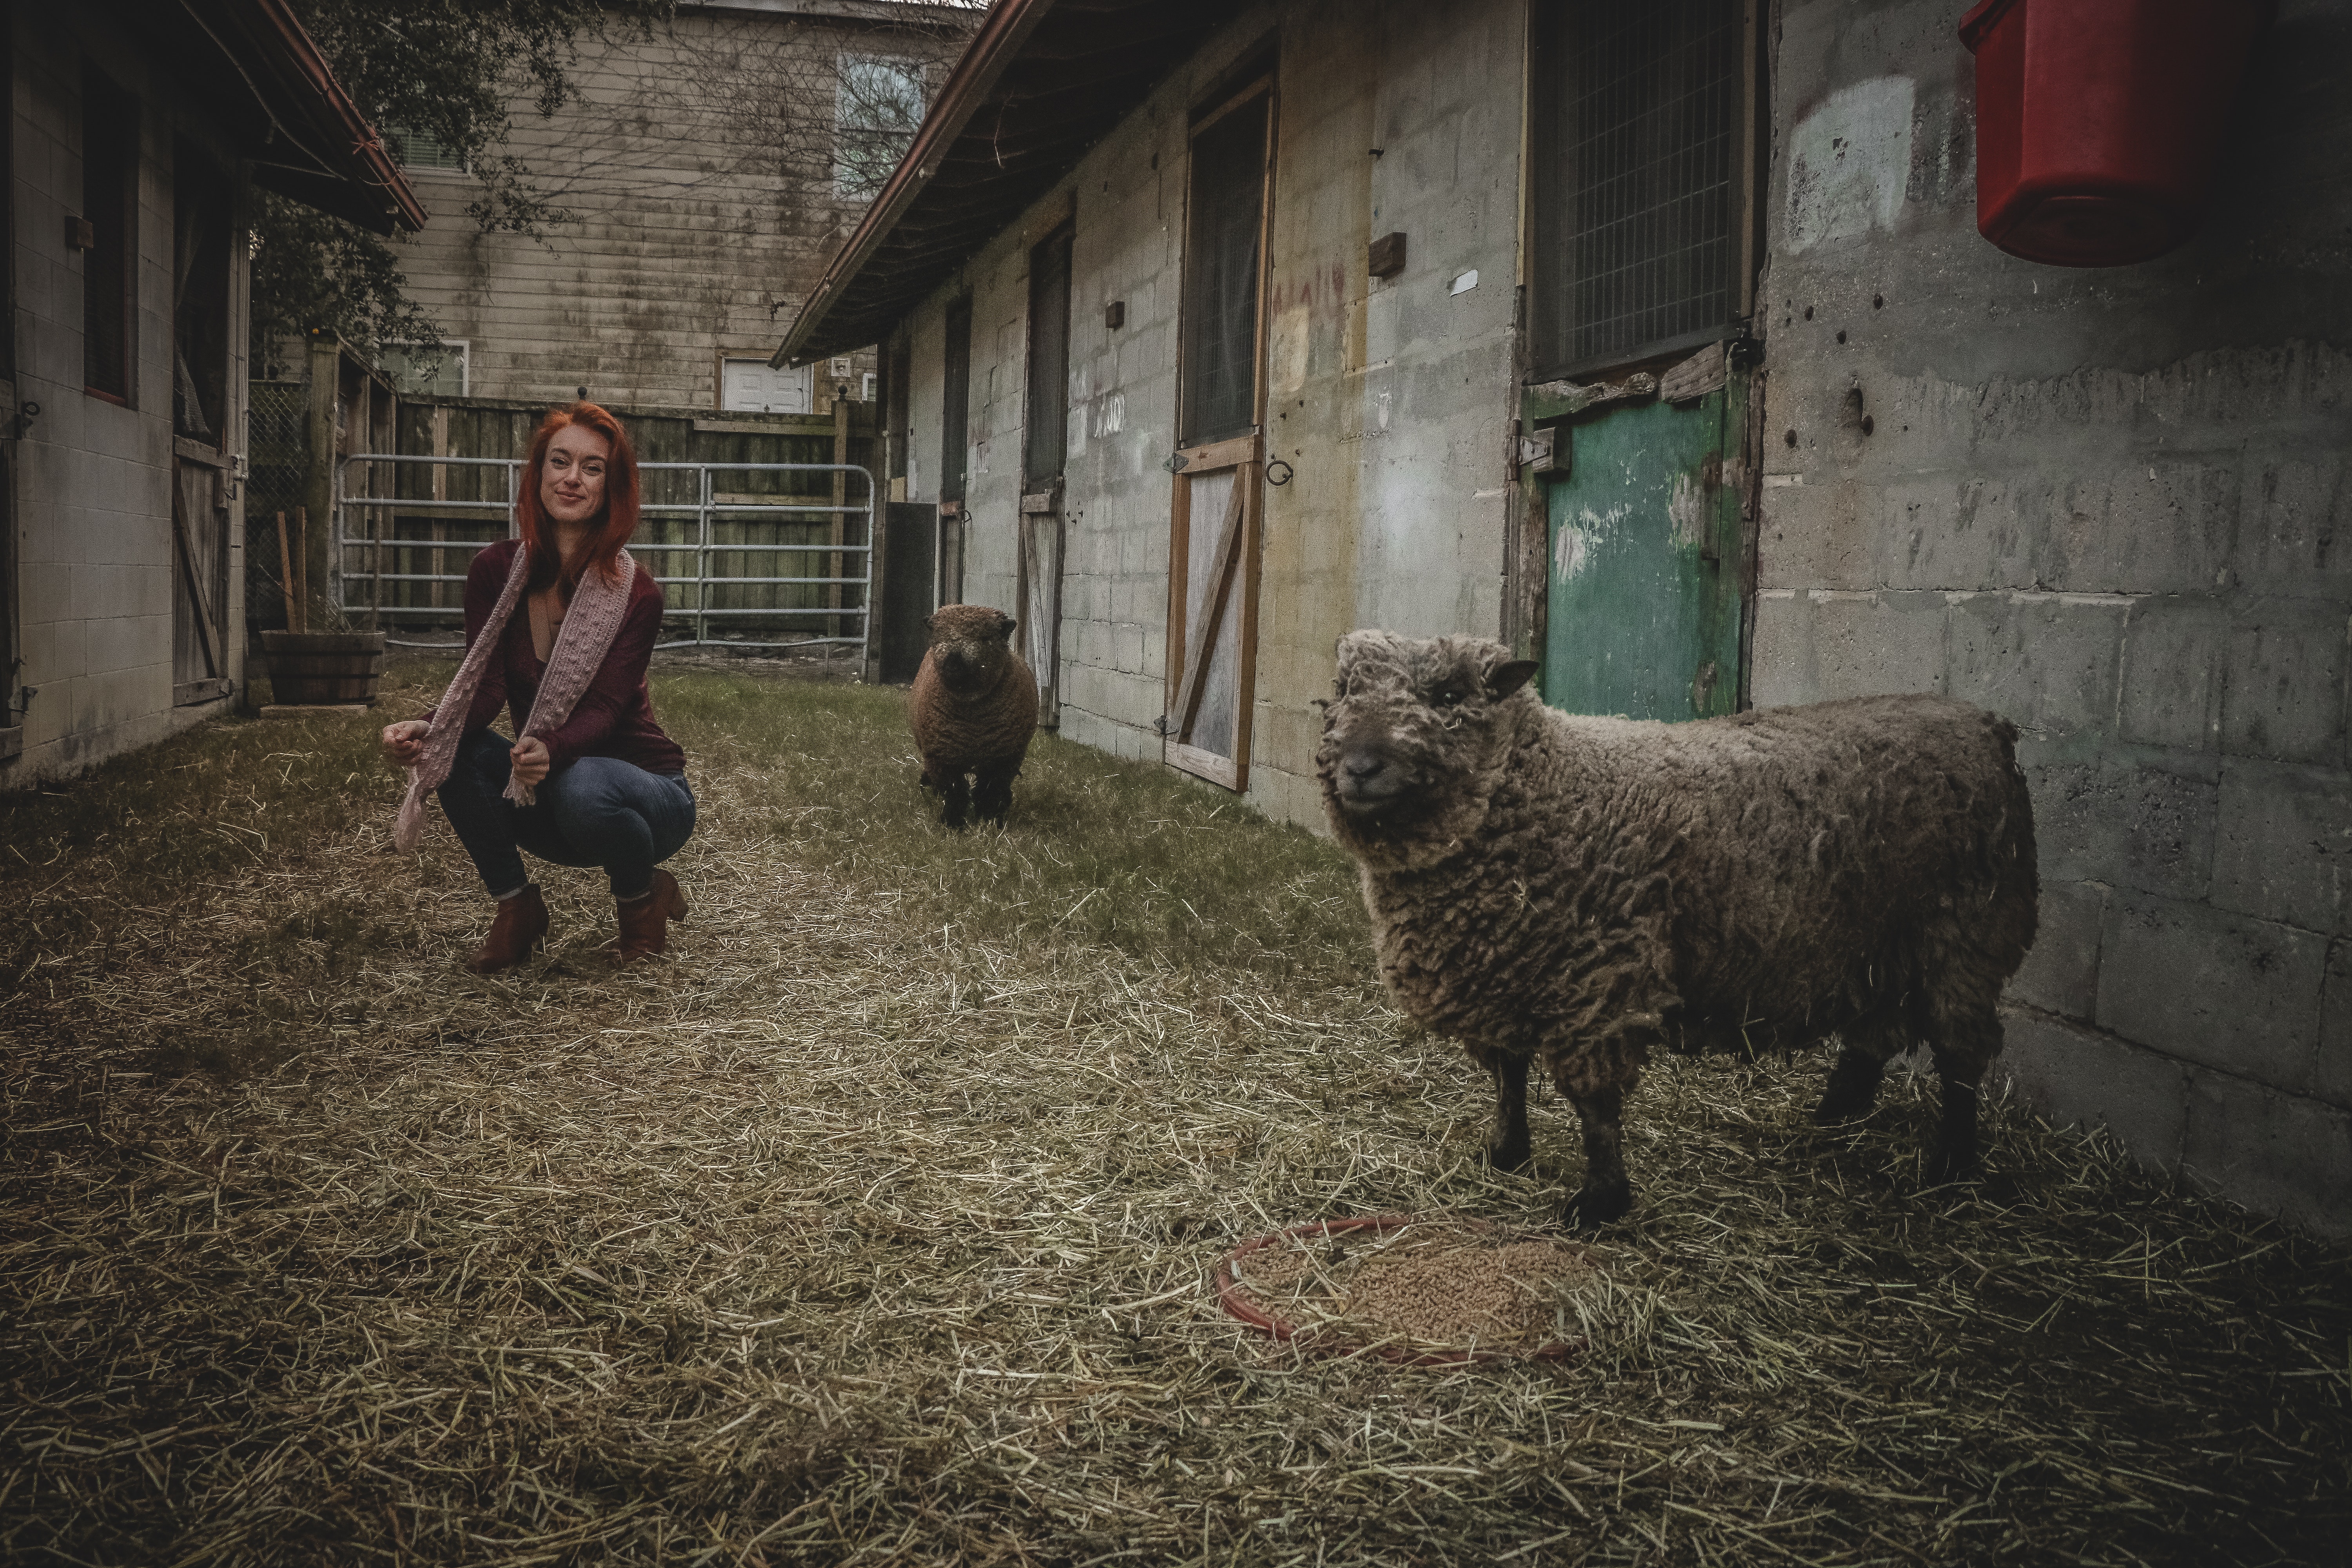 Woman doing squat near the gray sheep photo